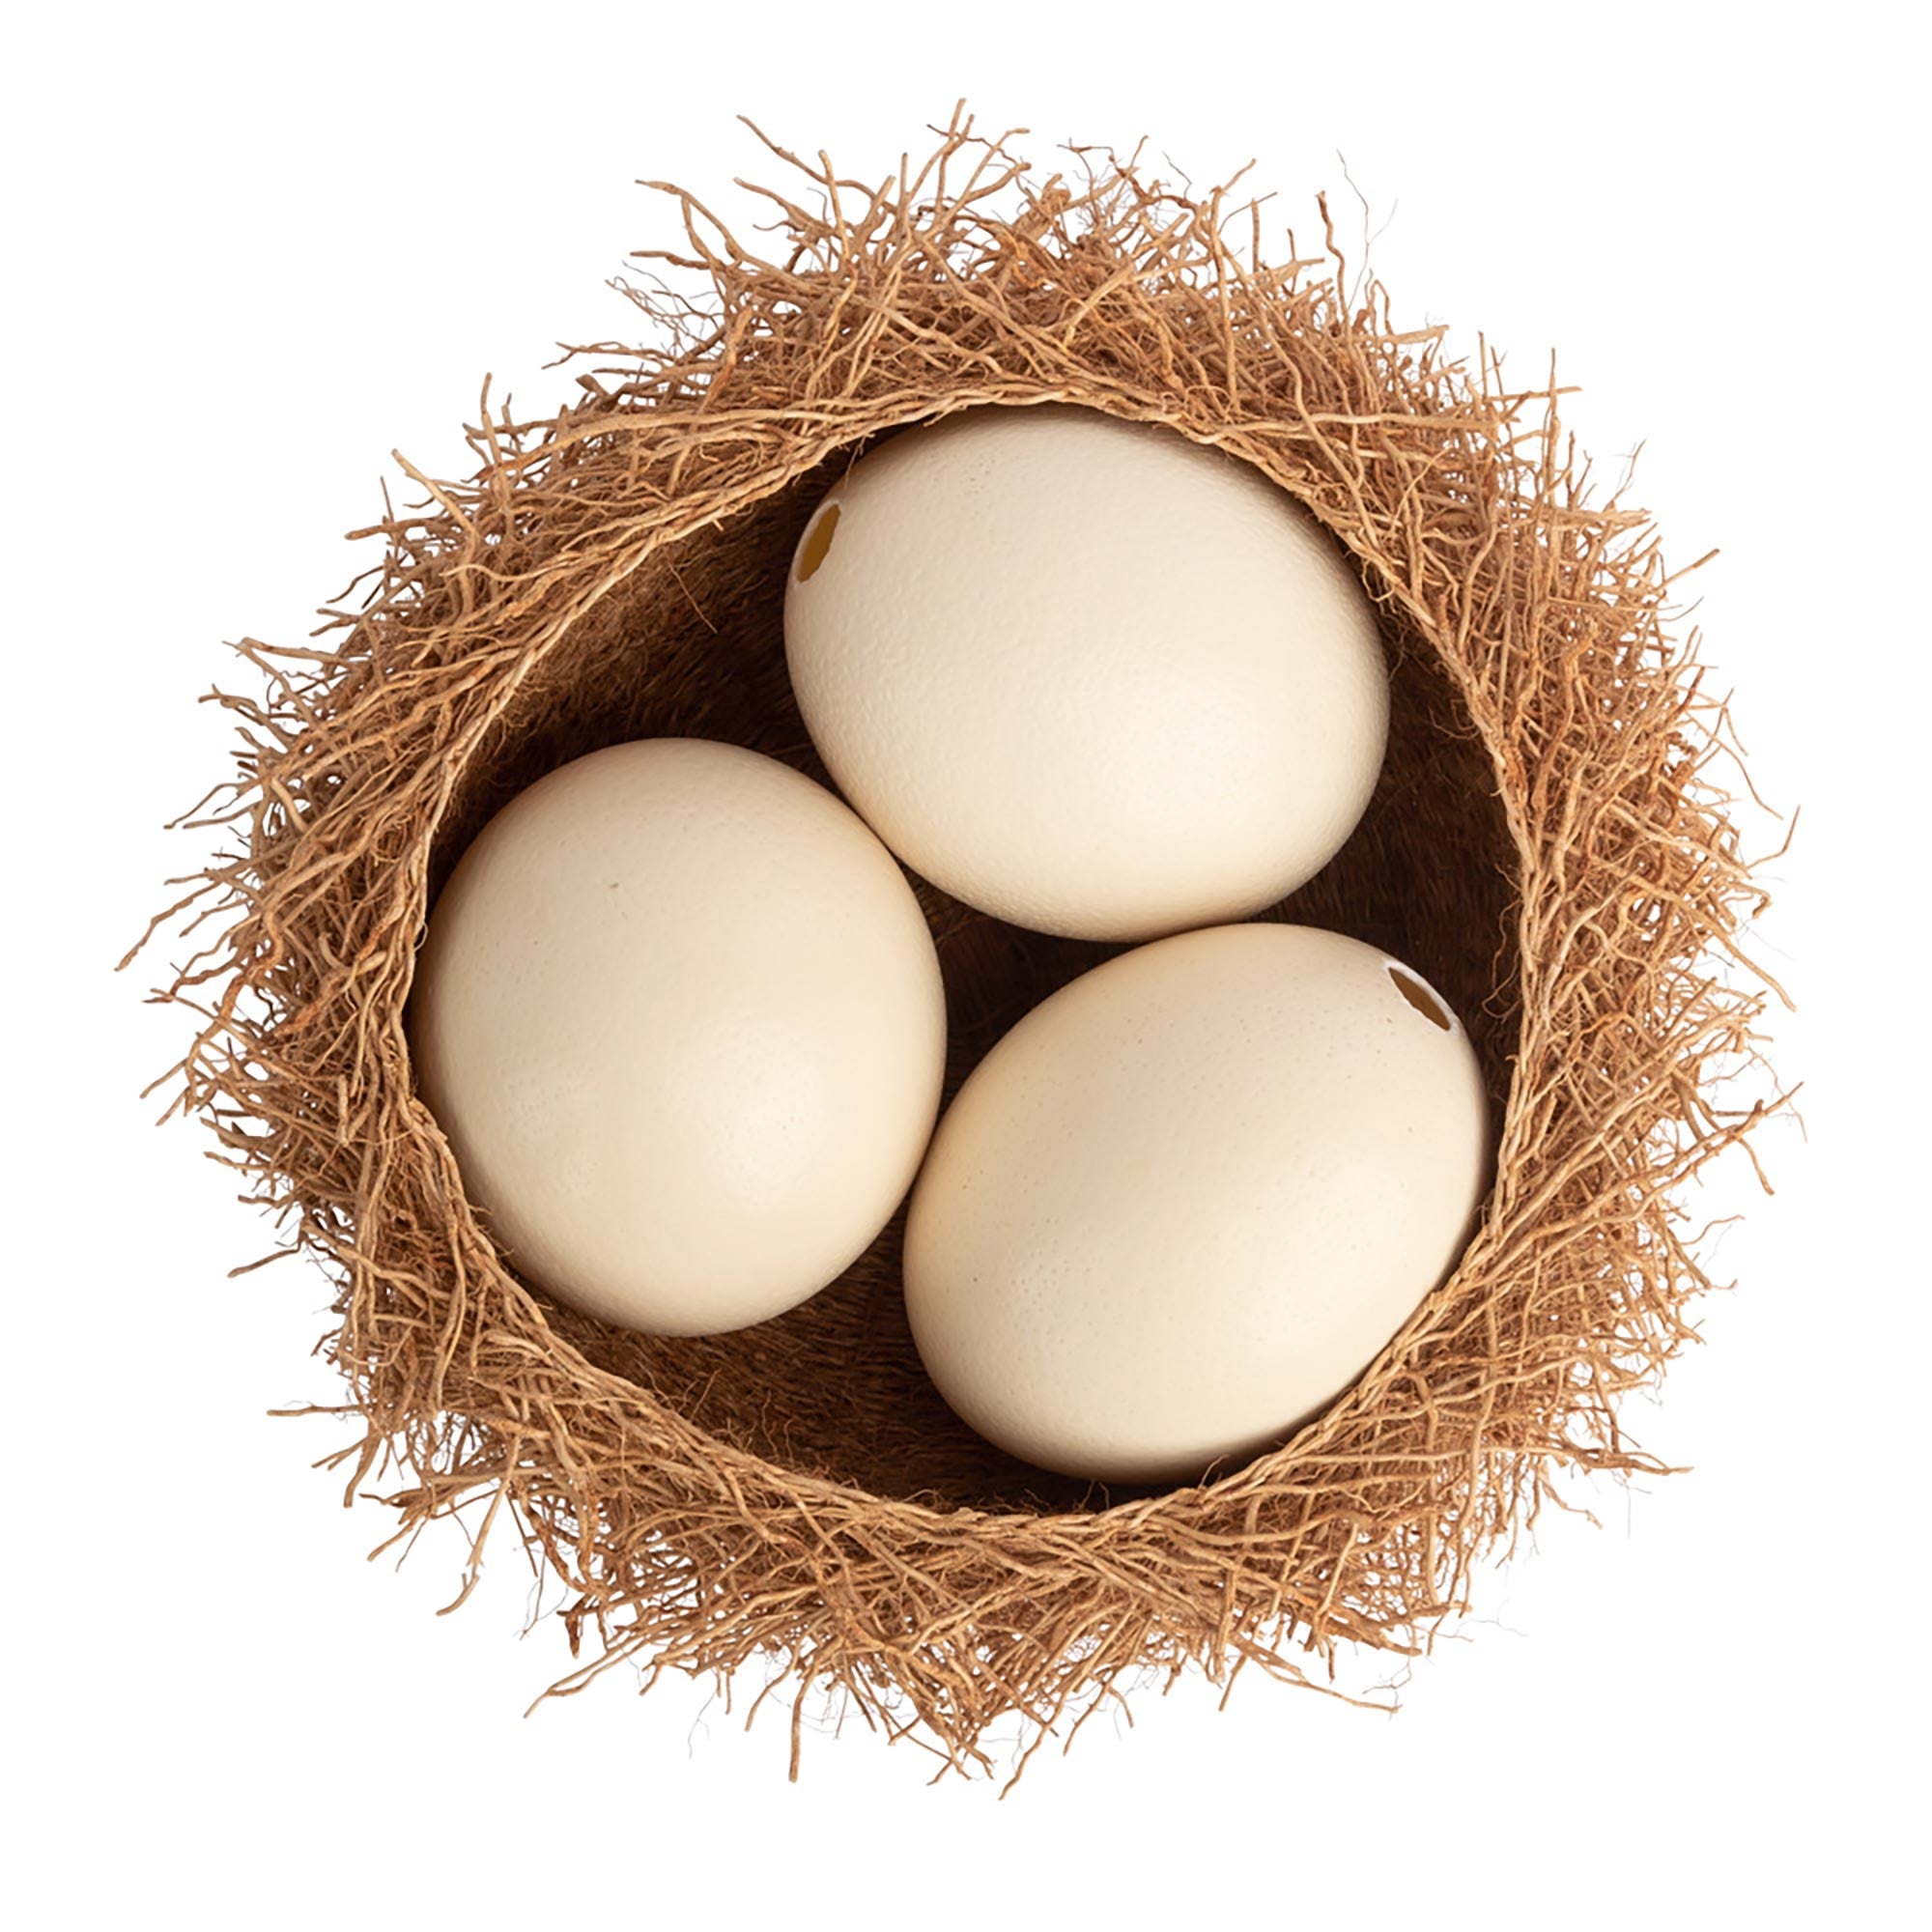 Plain Polished Ostrich Egg